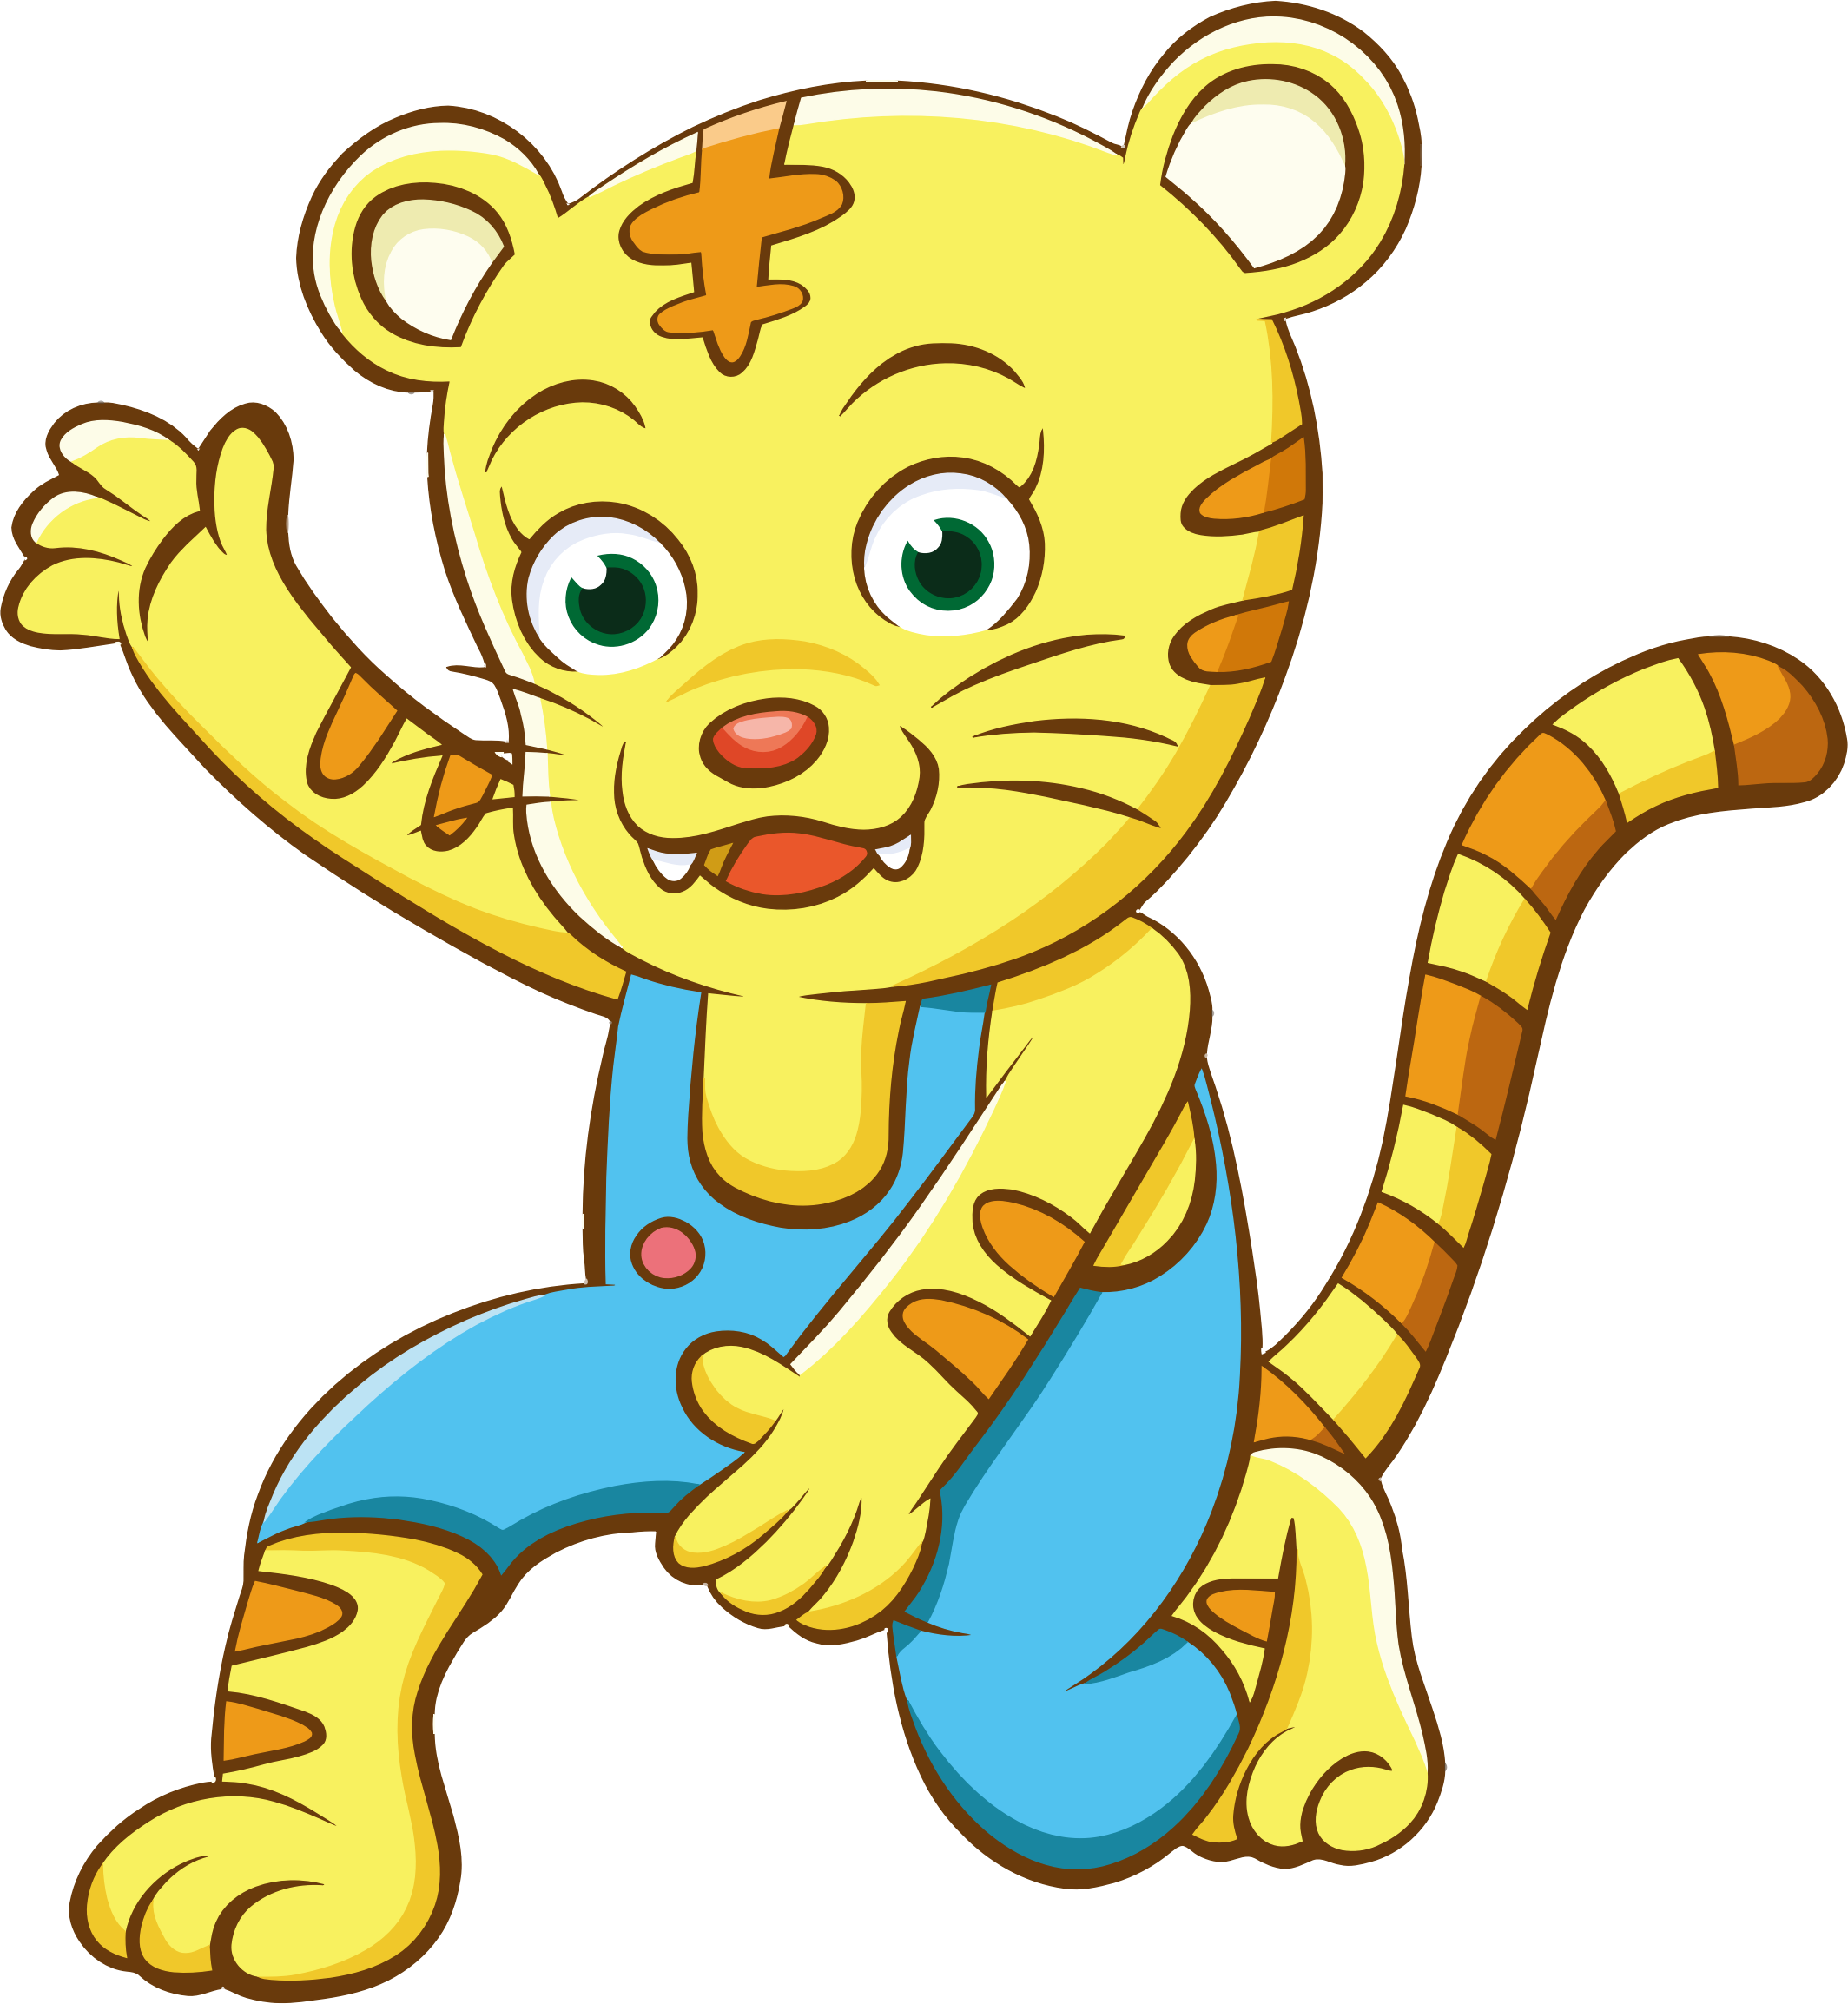 Cheetah Cartoon vector clipart image